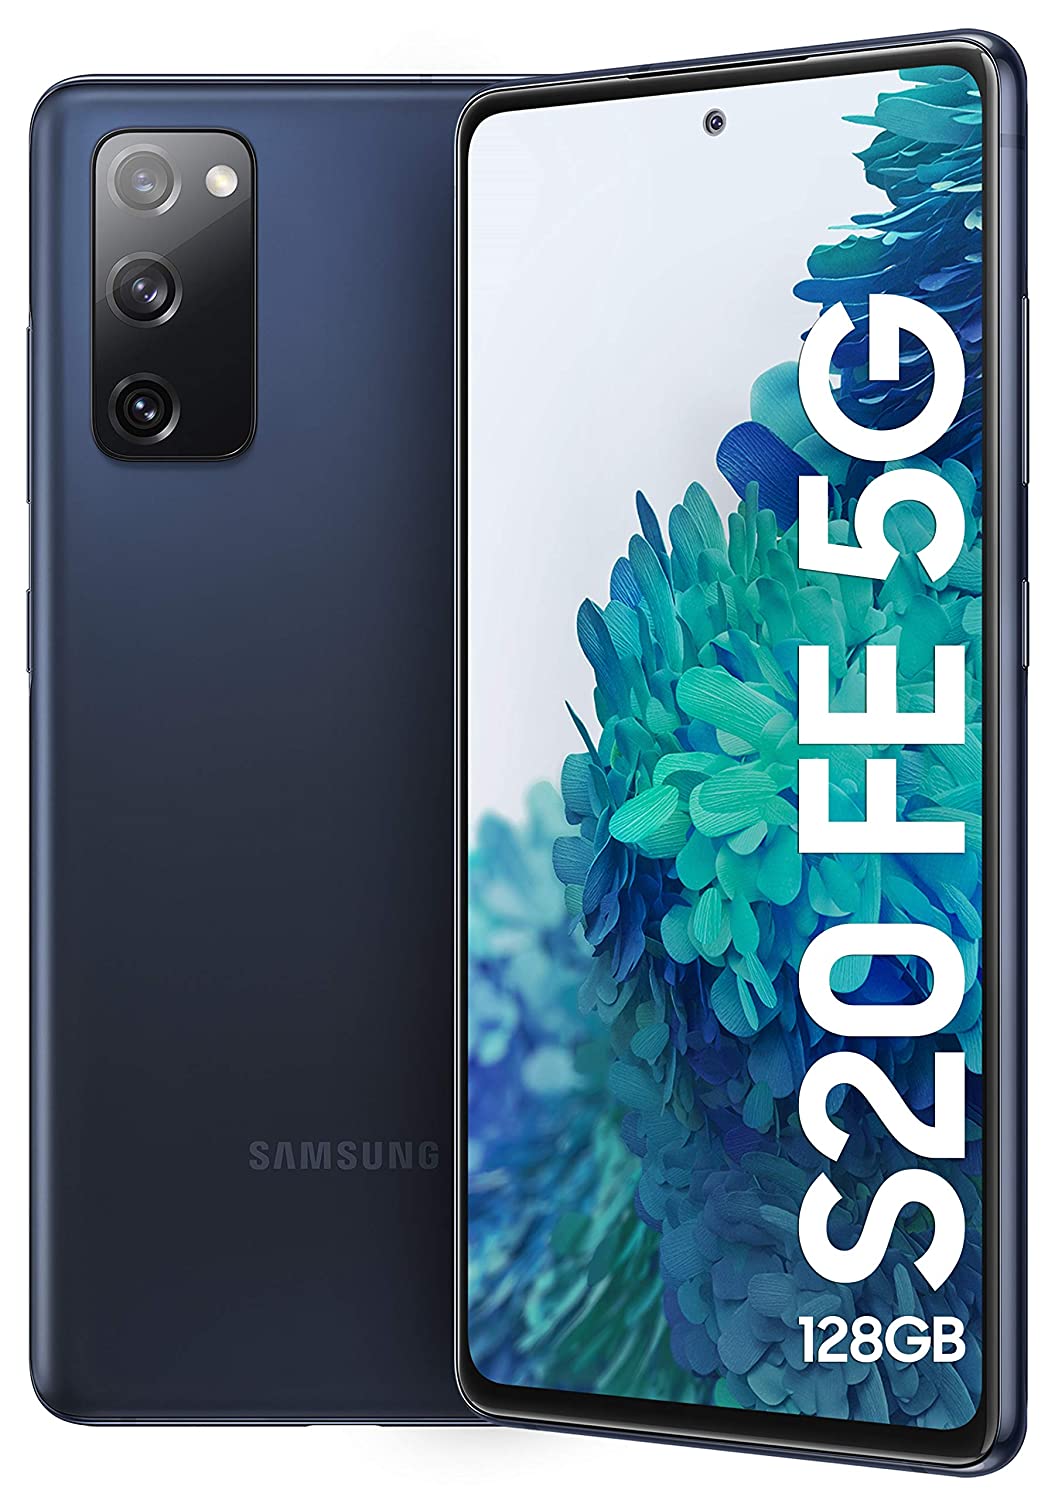 Samsung Galaxy S20 FE Amazon